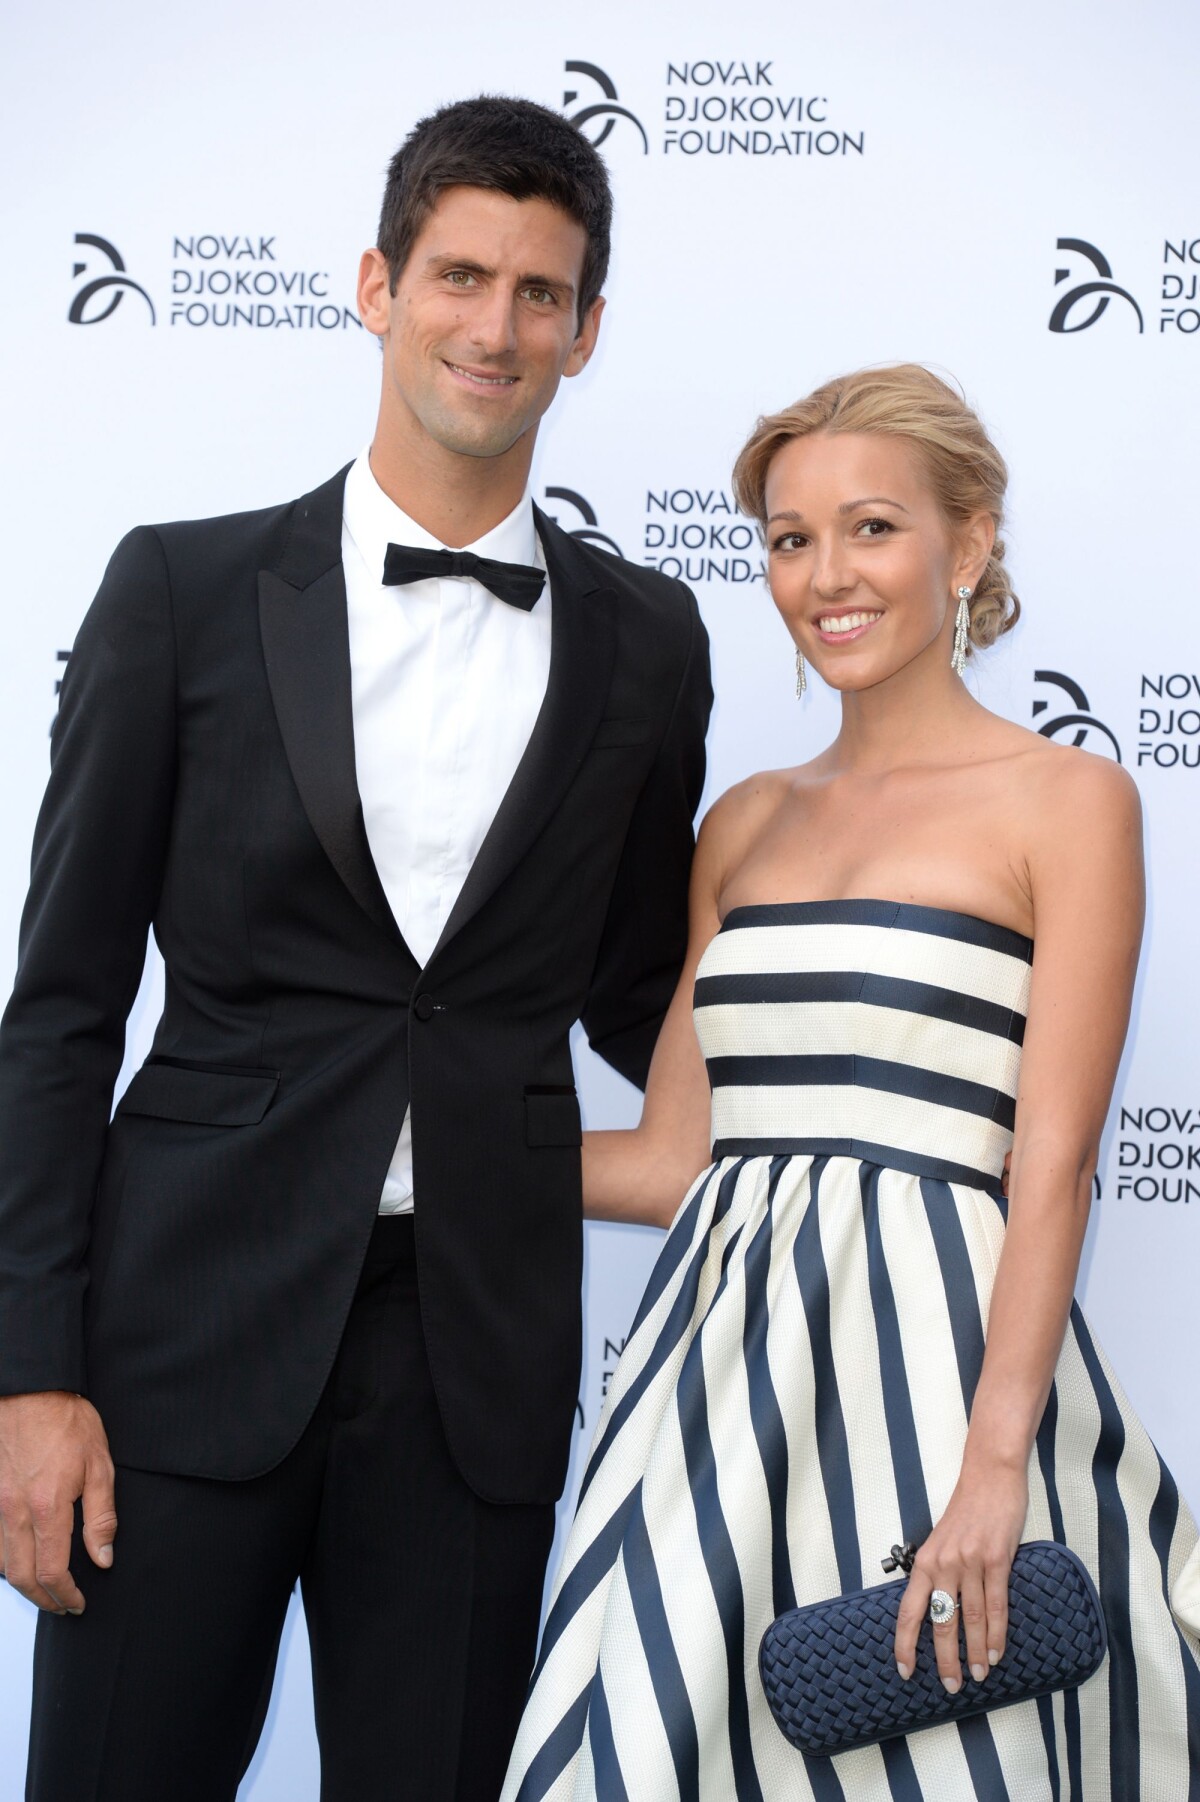 Vidéo Novak Djokovic Et Sa Fiancée Jelena Ristic à Londres Le 8 Juillet 2013 Purepeople